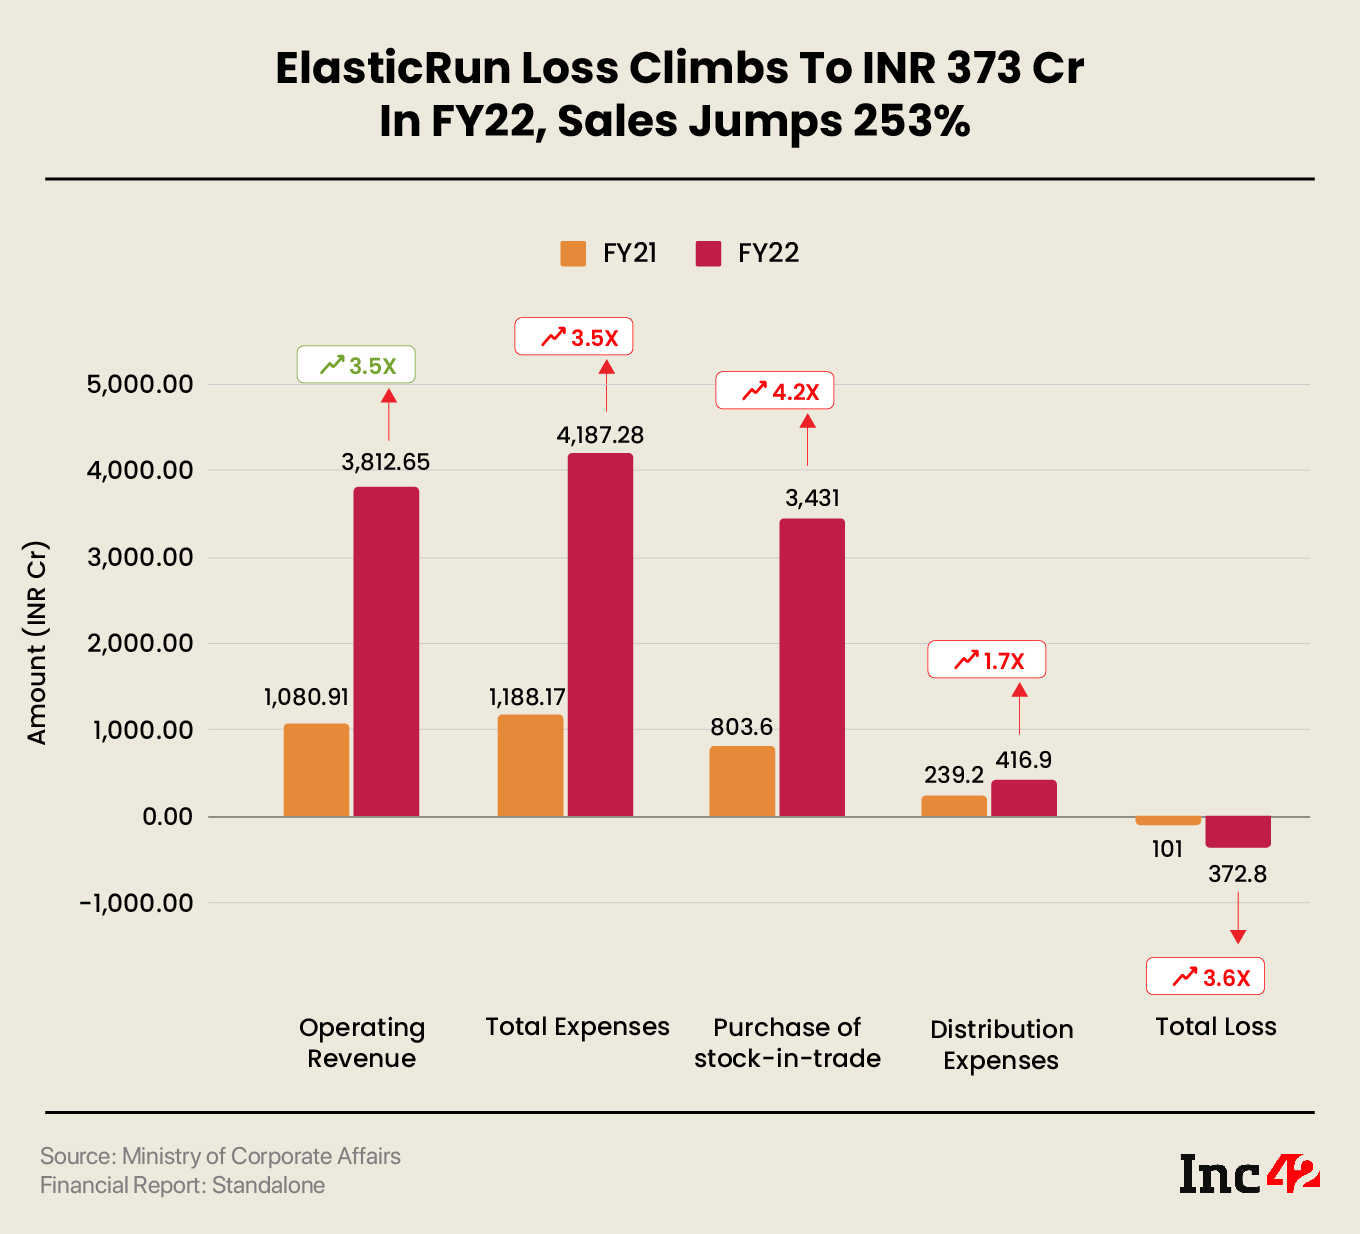 B2B Ecommerce Unicorn ElasticRun’s FY22 Loss Widens 3.6X To INR 373 Cr, Revenue Up 3.5X